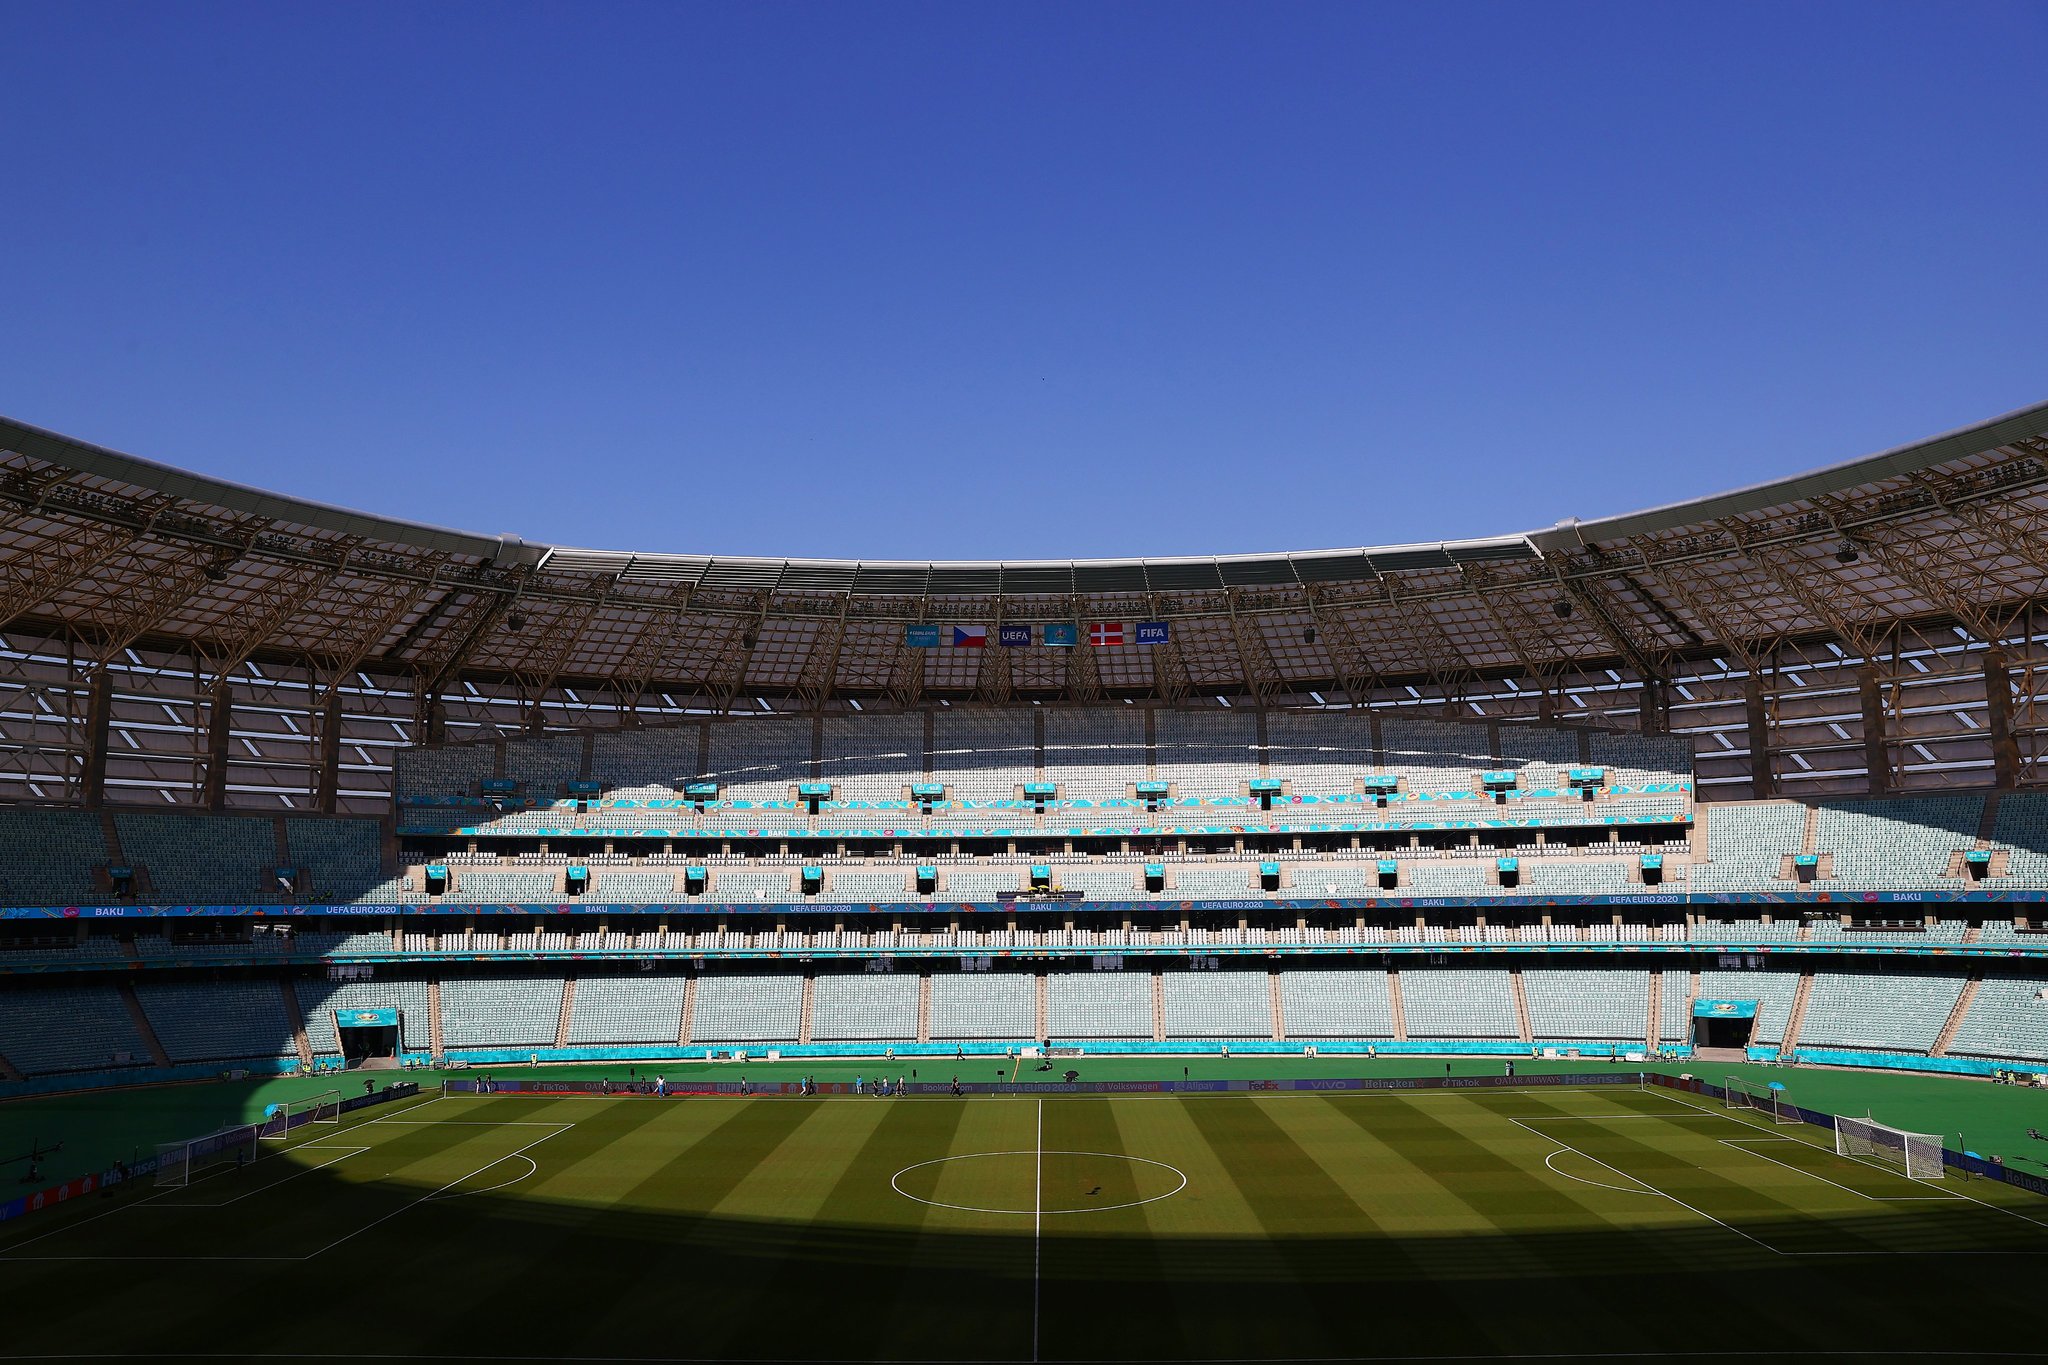 The stadium in Baku